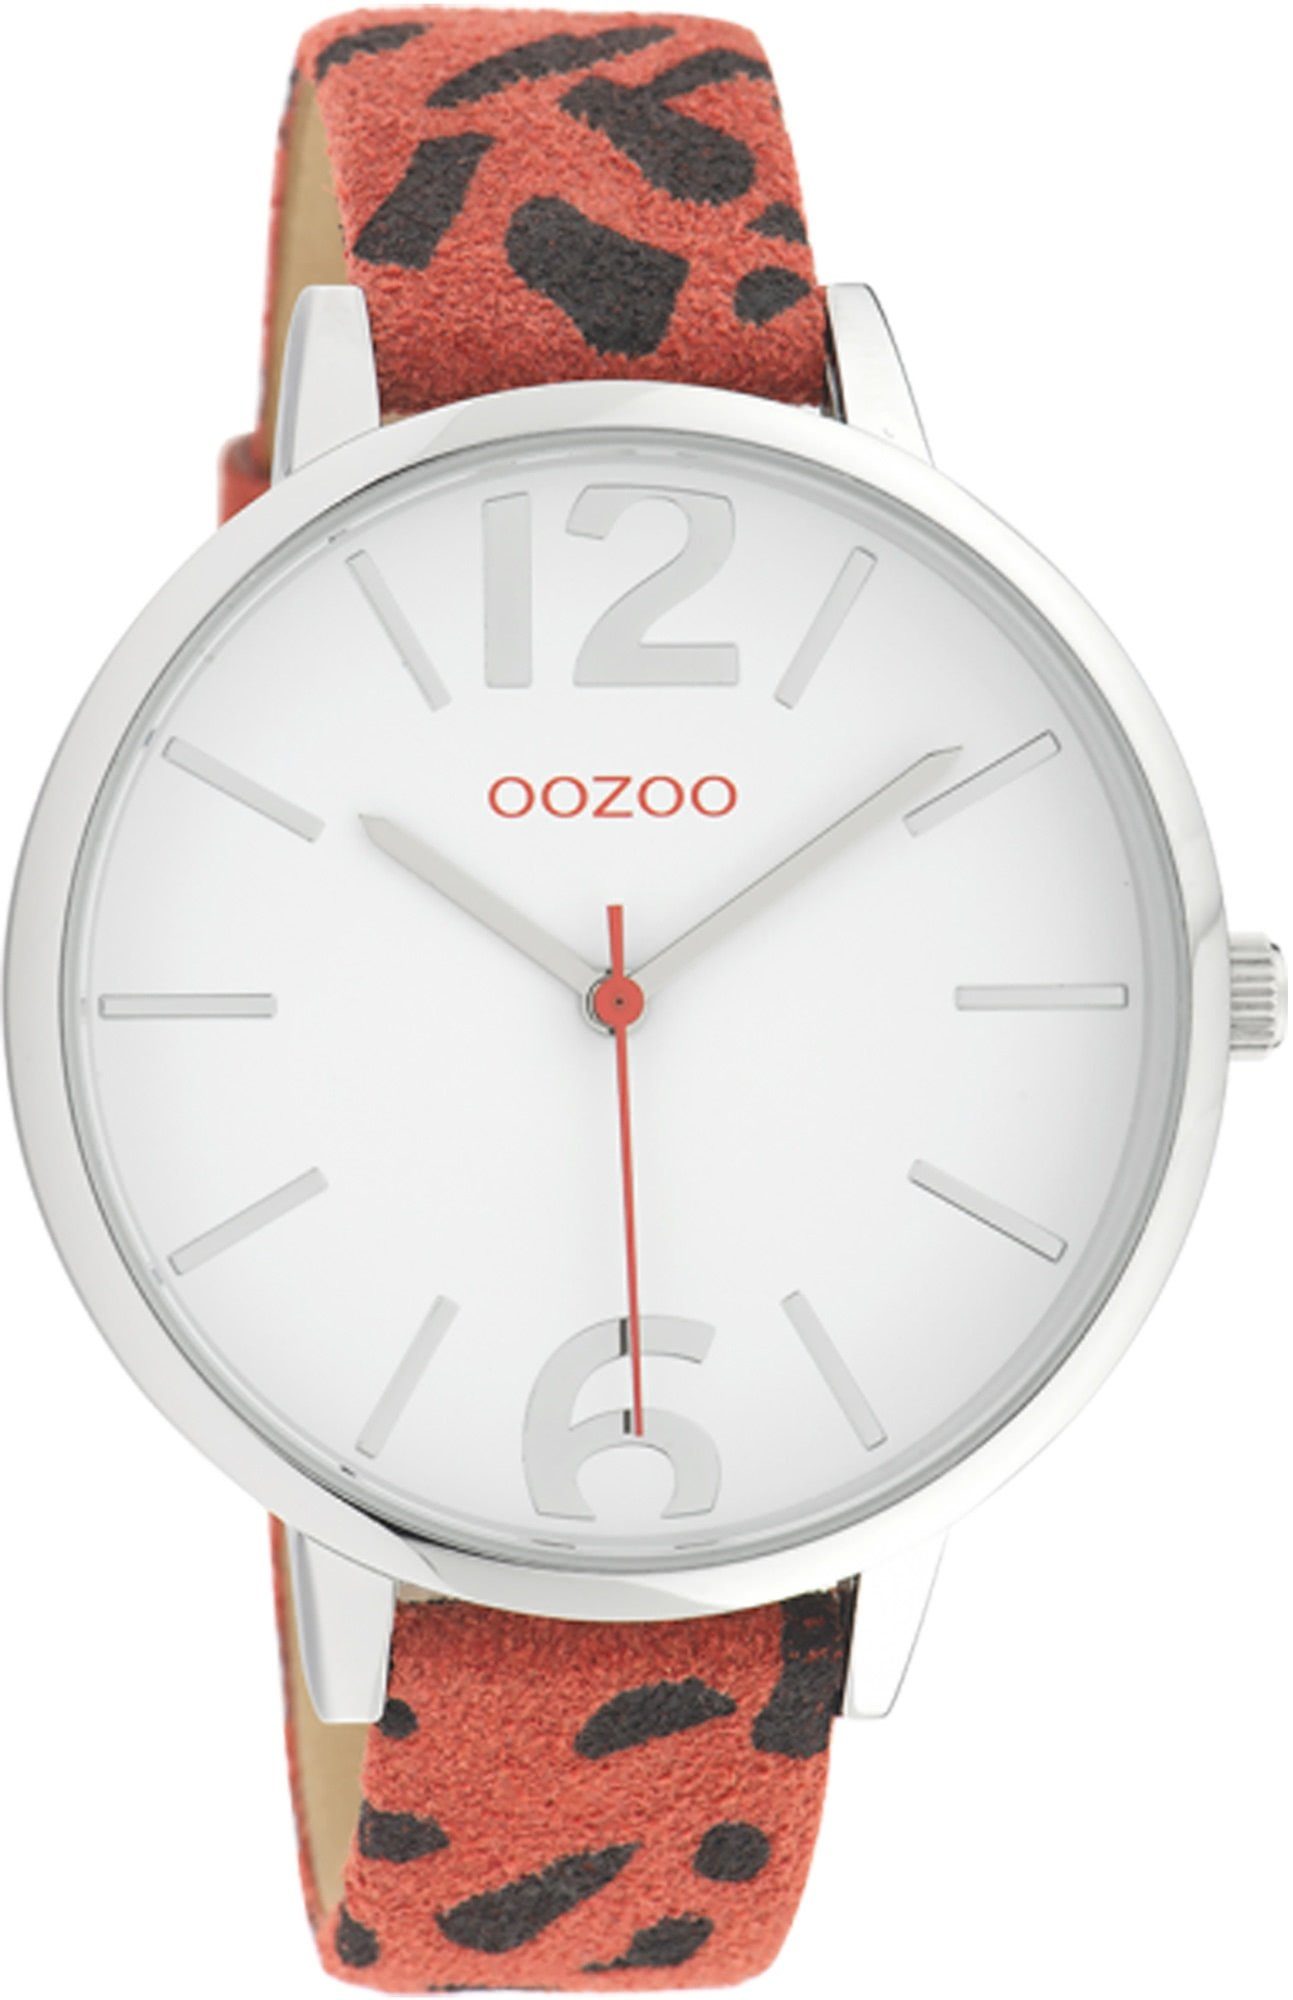 OOZOO Quarzuhr Oozoo Damen Armbanduhr rot schwarz, Damenuhr rund, groß (ca. 43mm) Lederarmband, Fashion-Style | Quarzuhren